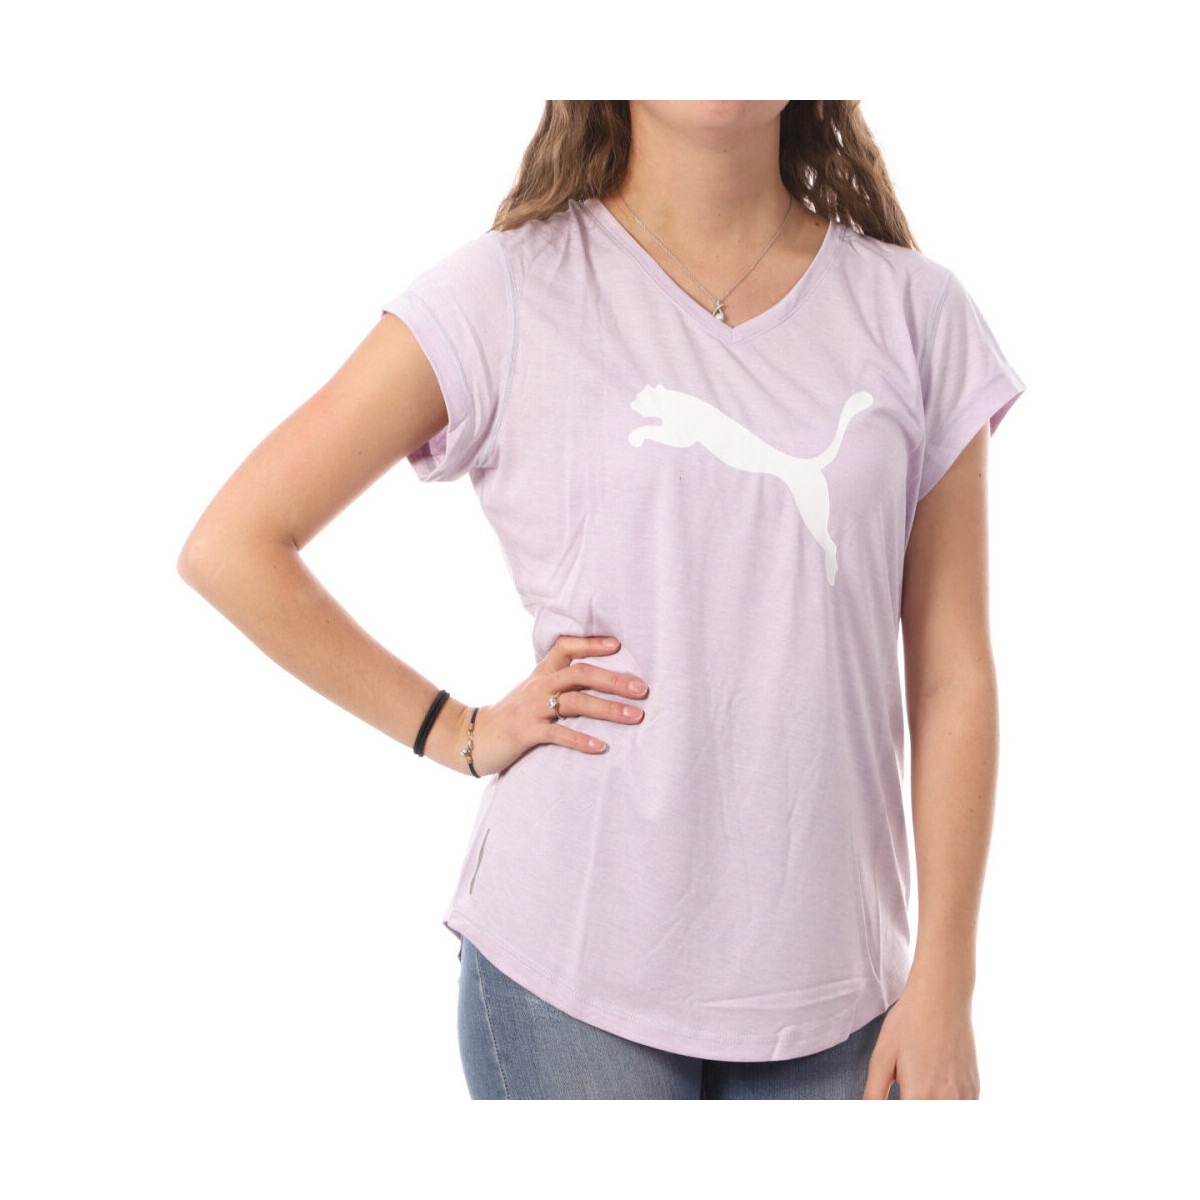 Kleidung Damen T-Shirts & Poloshirts Puma 522418-68 Violett